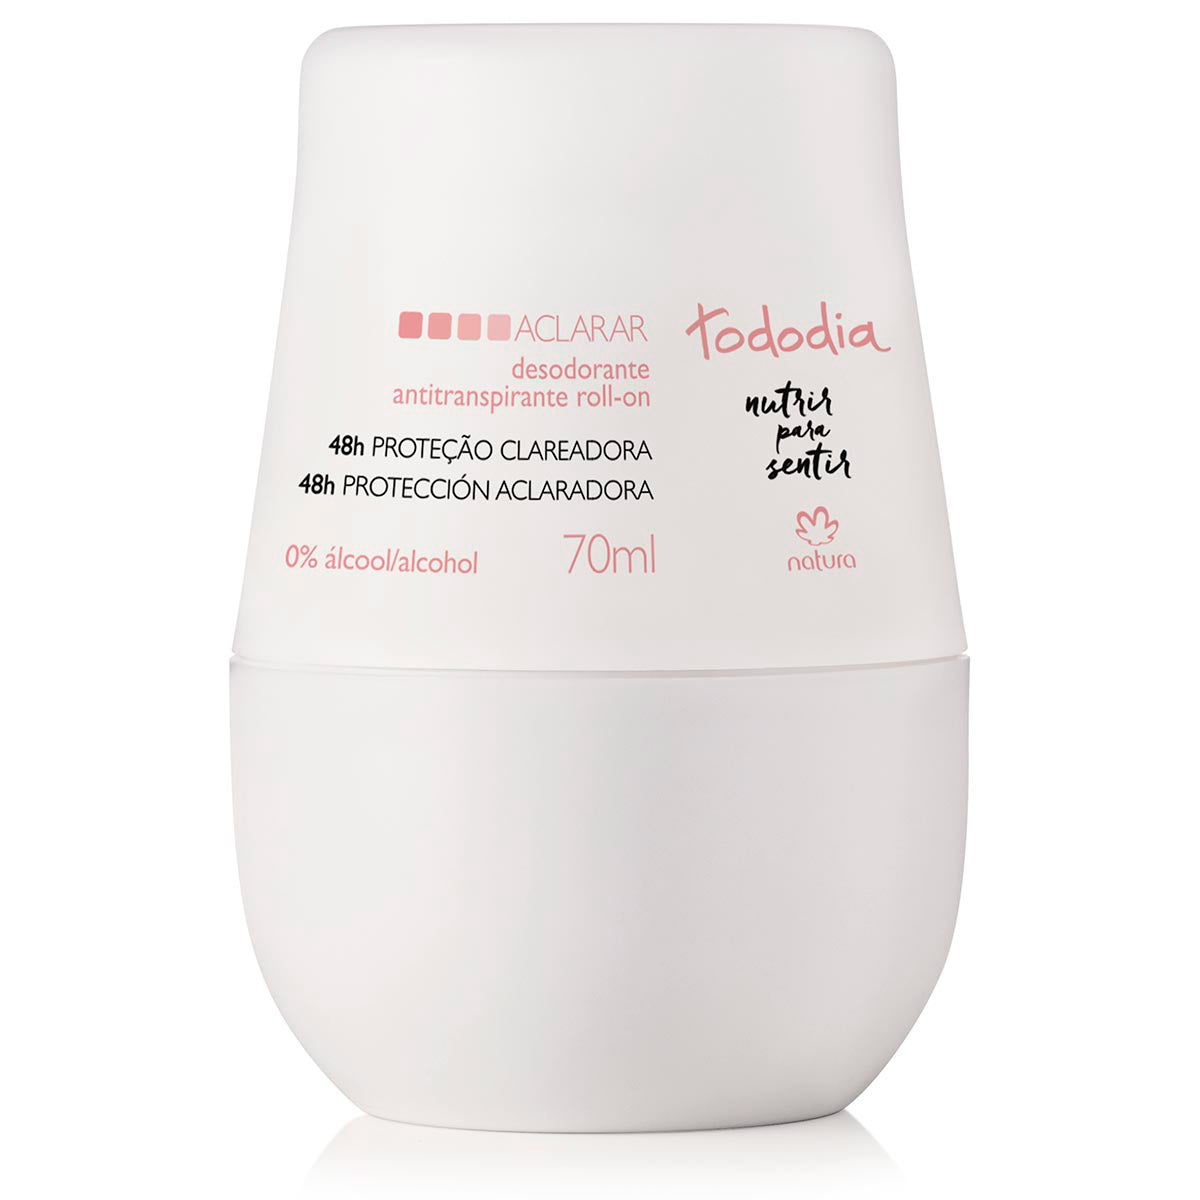 Desodorante Roll-on Aclarar Tododia - 70ml – IDA Beauty UK